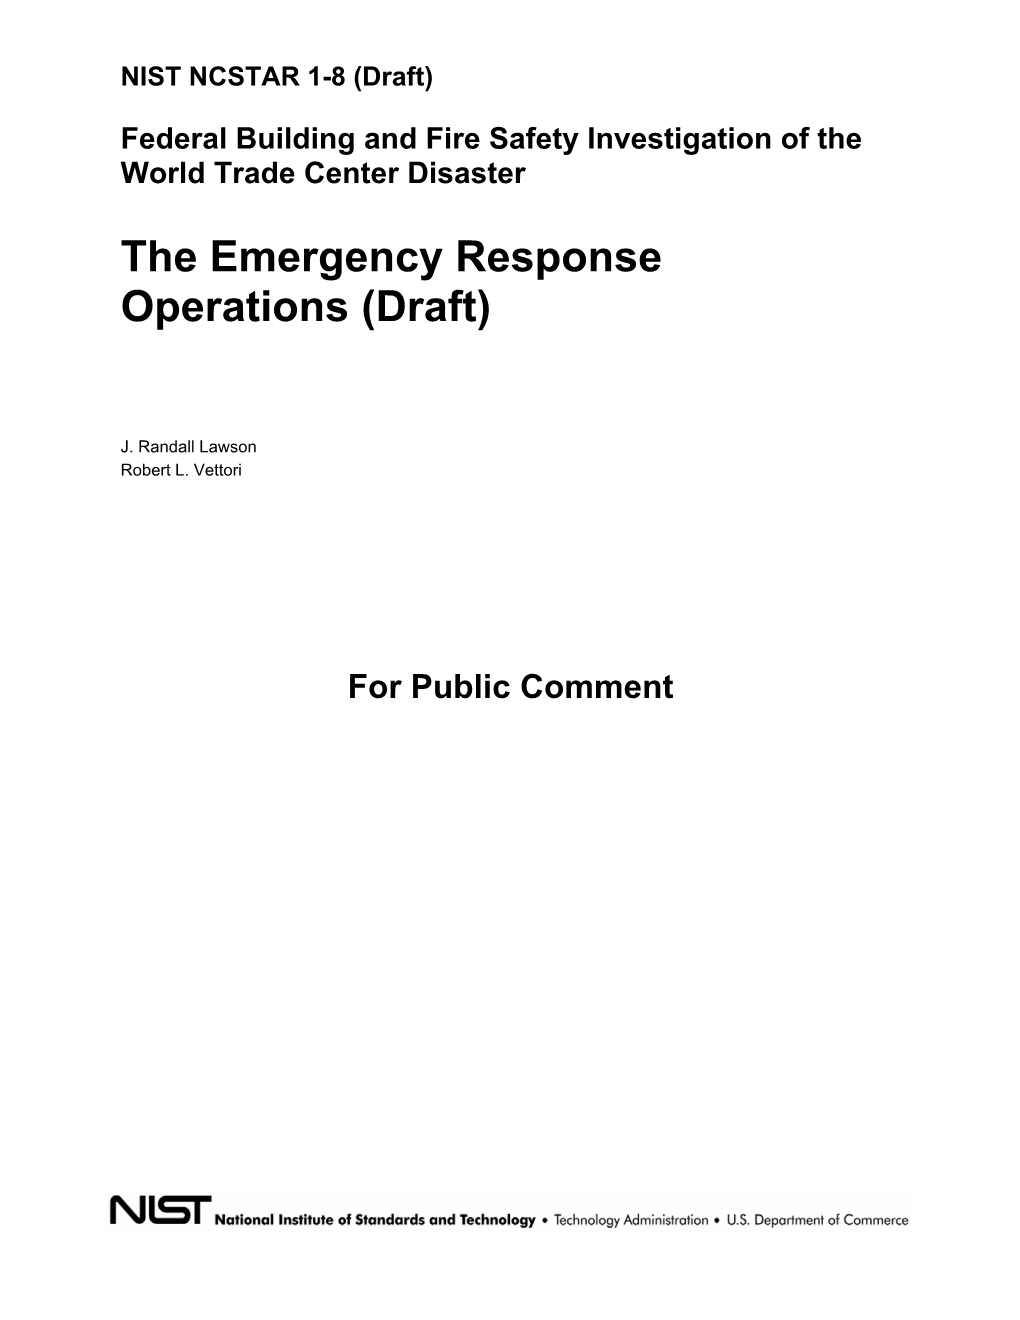 The Emergency Response Operations (Draft)